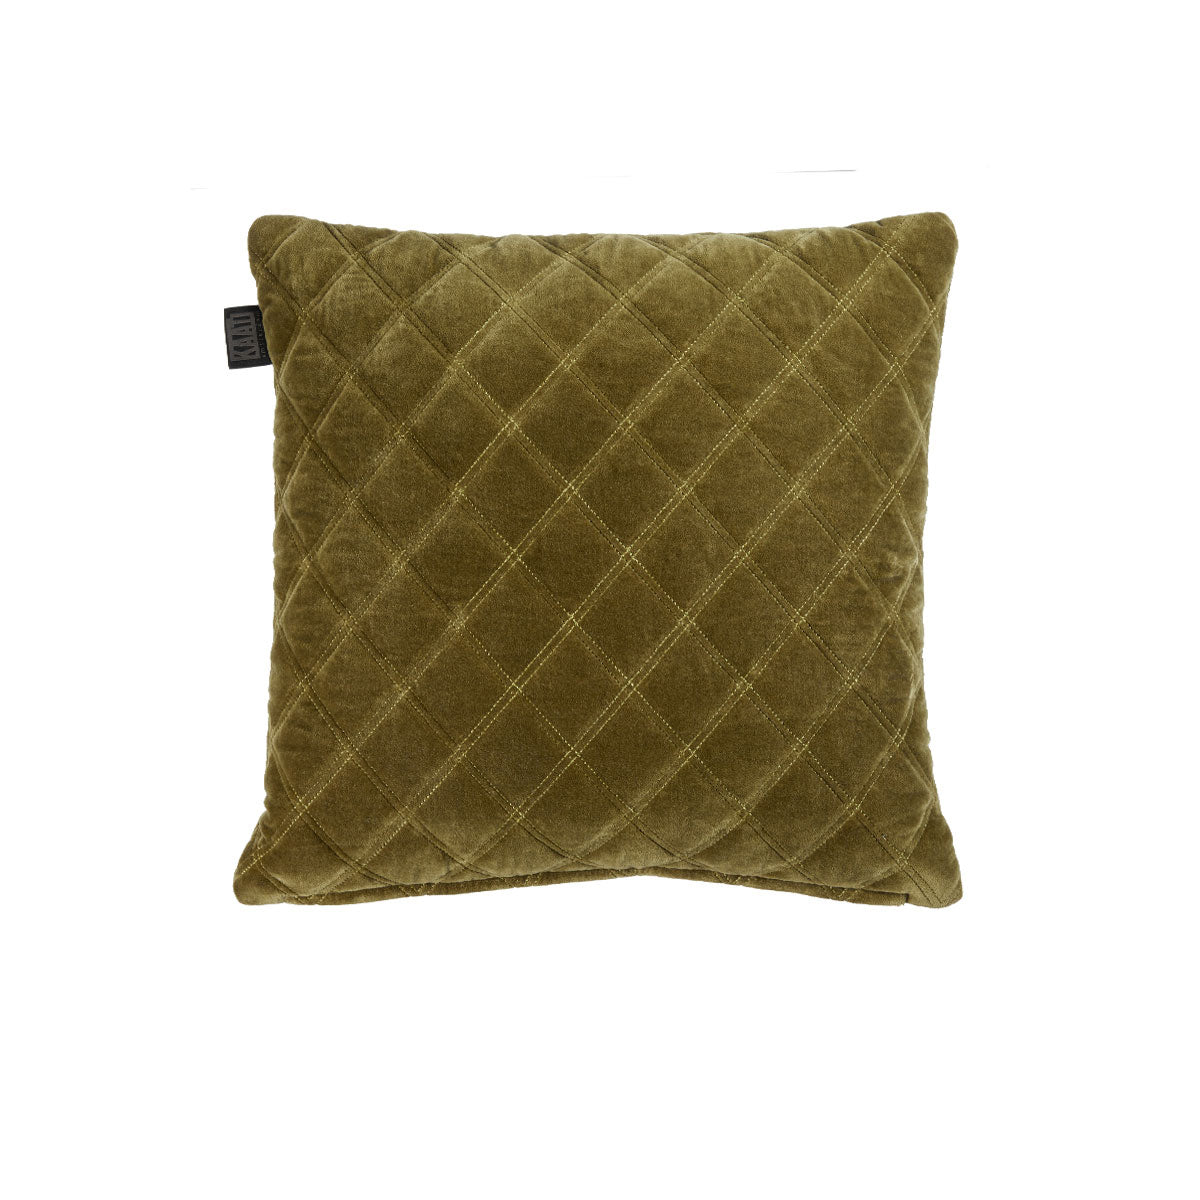 Bedding House Vercors Luxury Cotton Velvet Filled Square Cushion - Olive Green